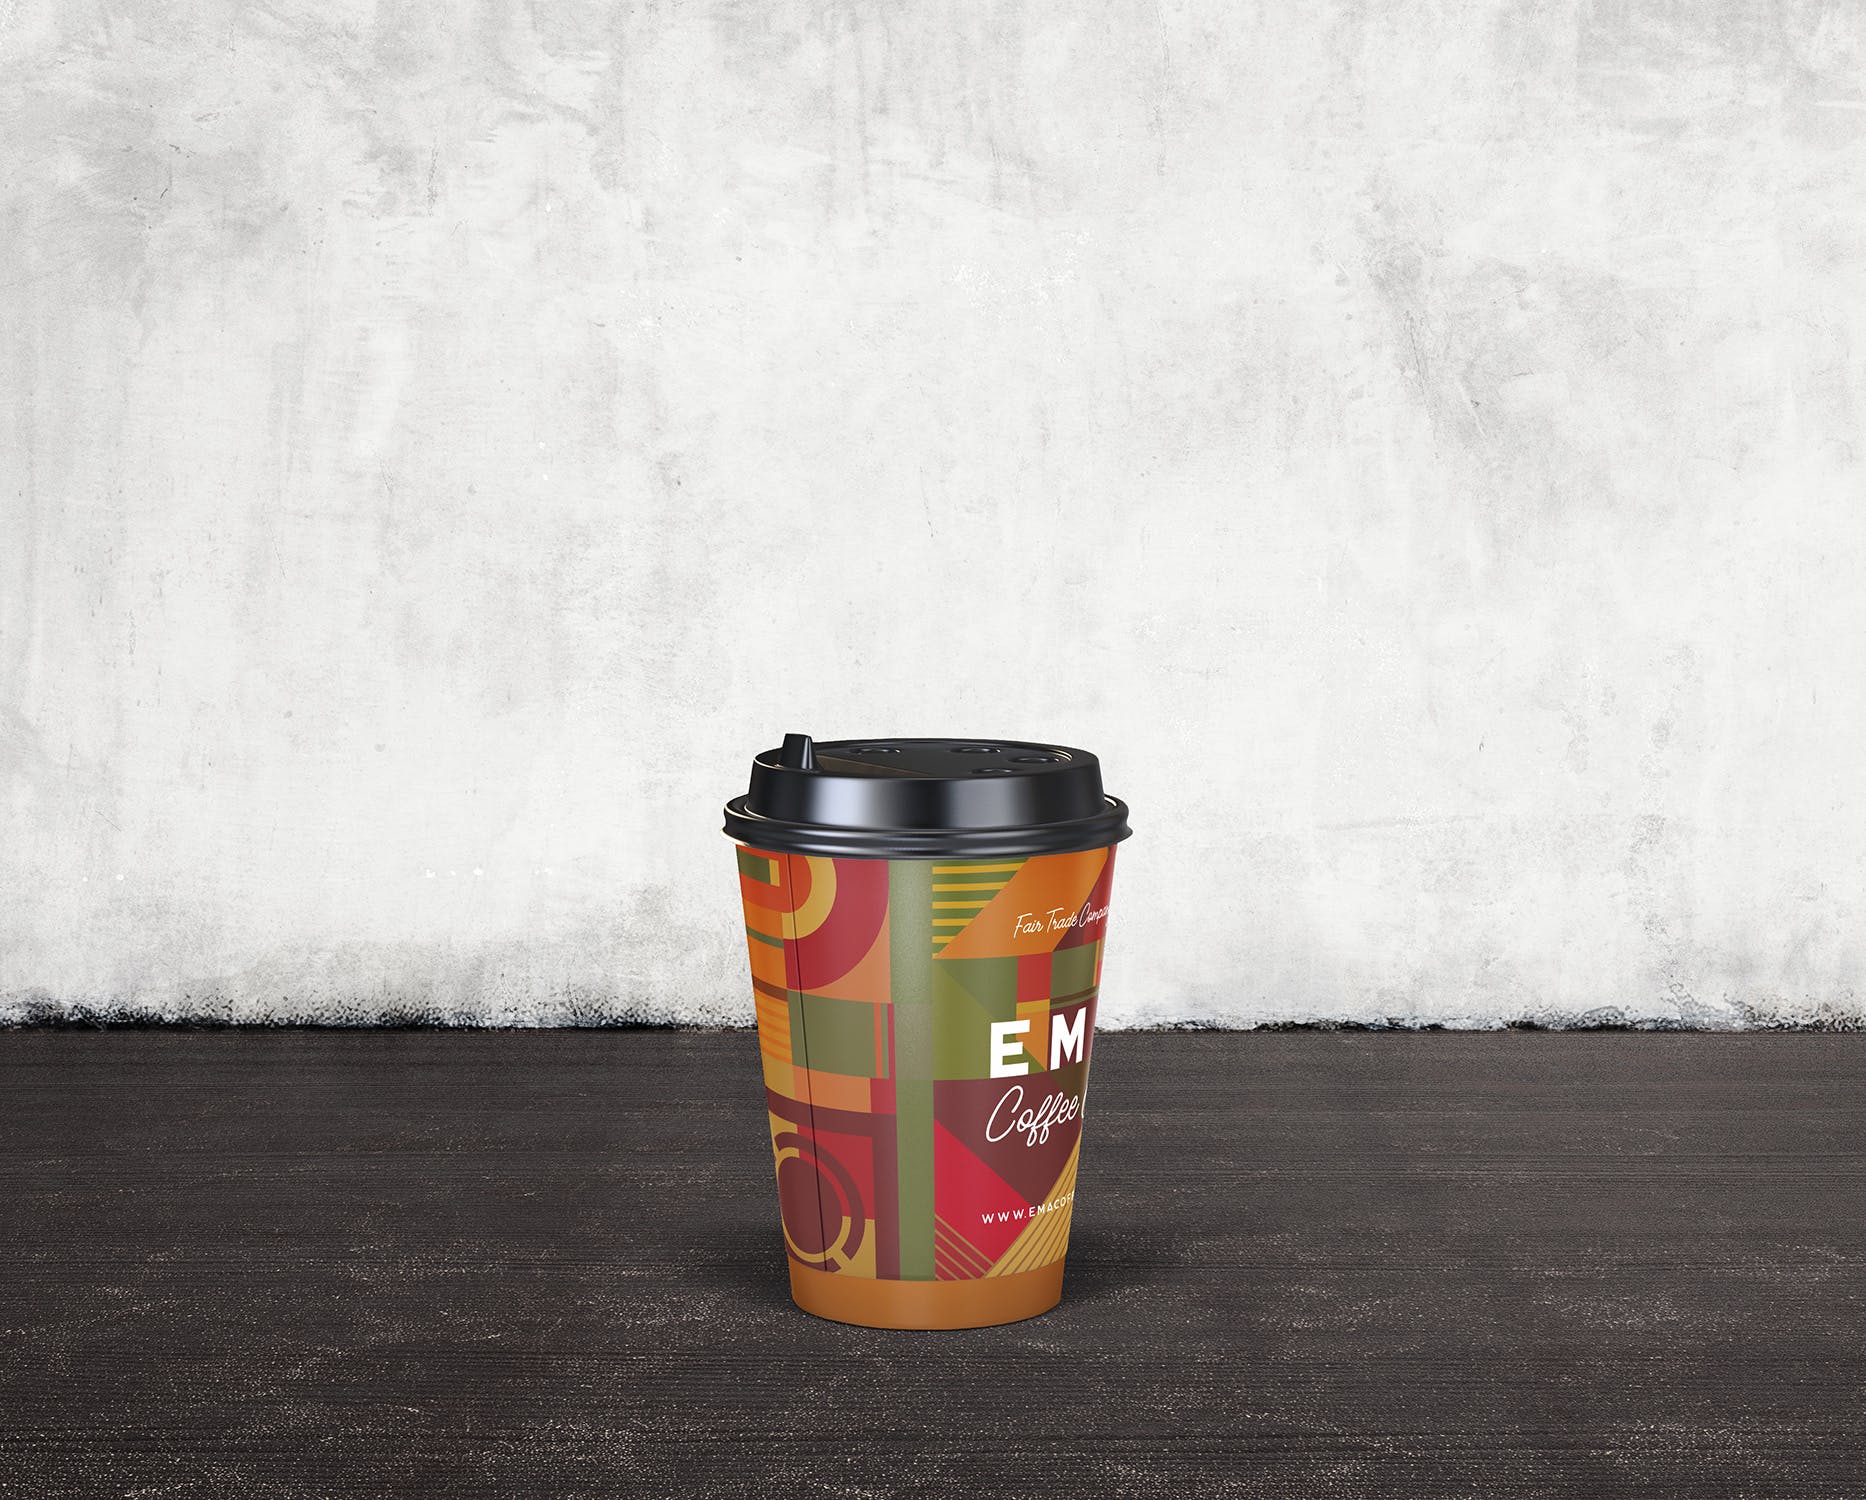 8个咖啡纸杯外观设计效果图素材库精选 8 Coffee Paper Cup Mockups插图(3)